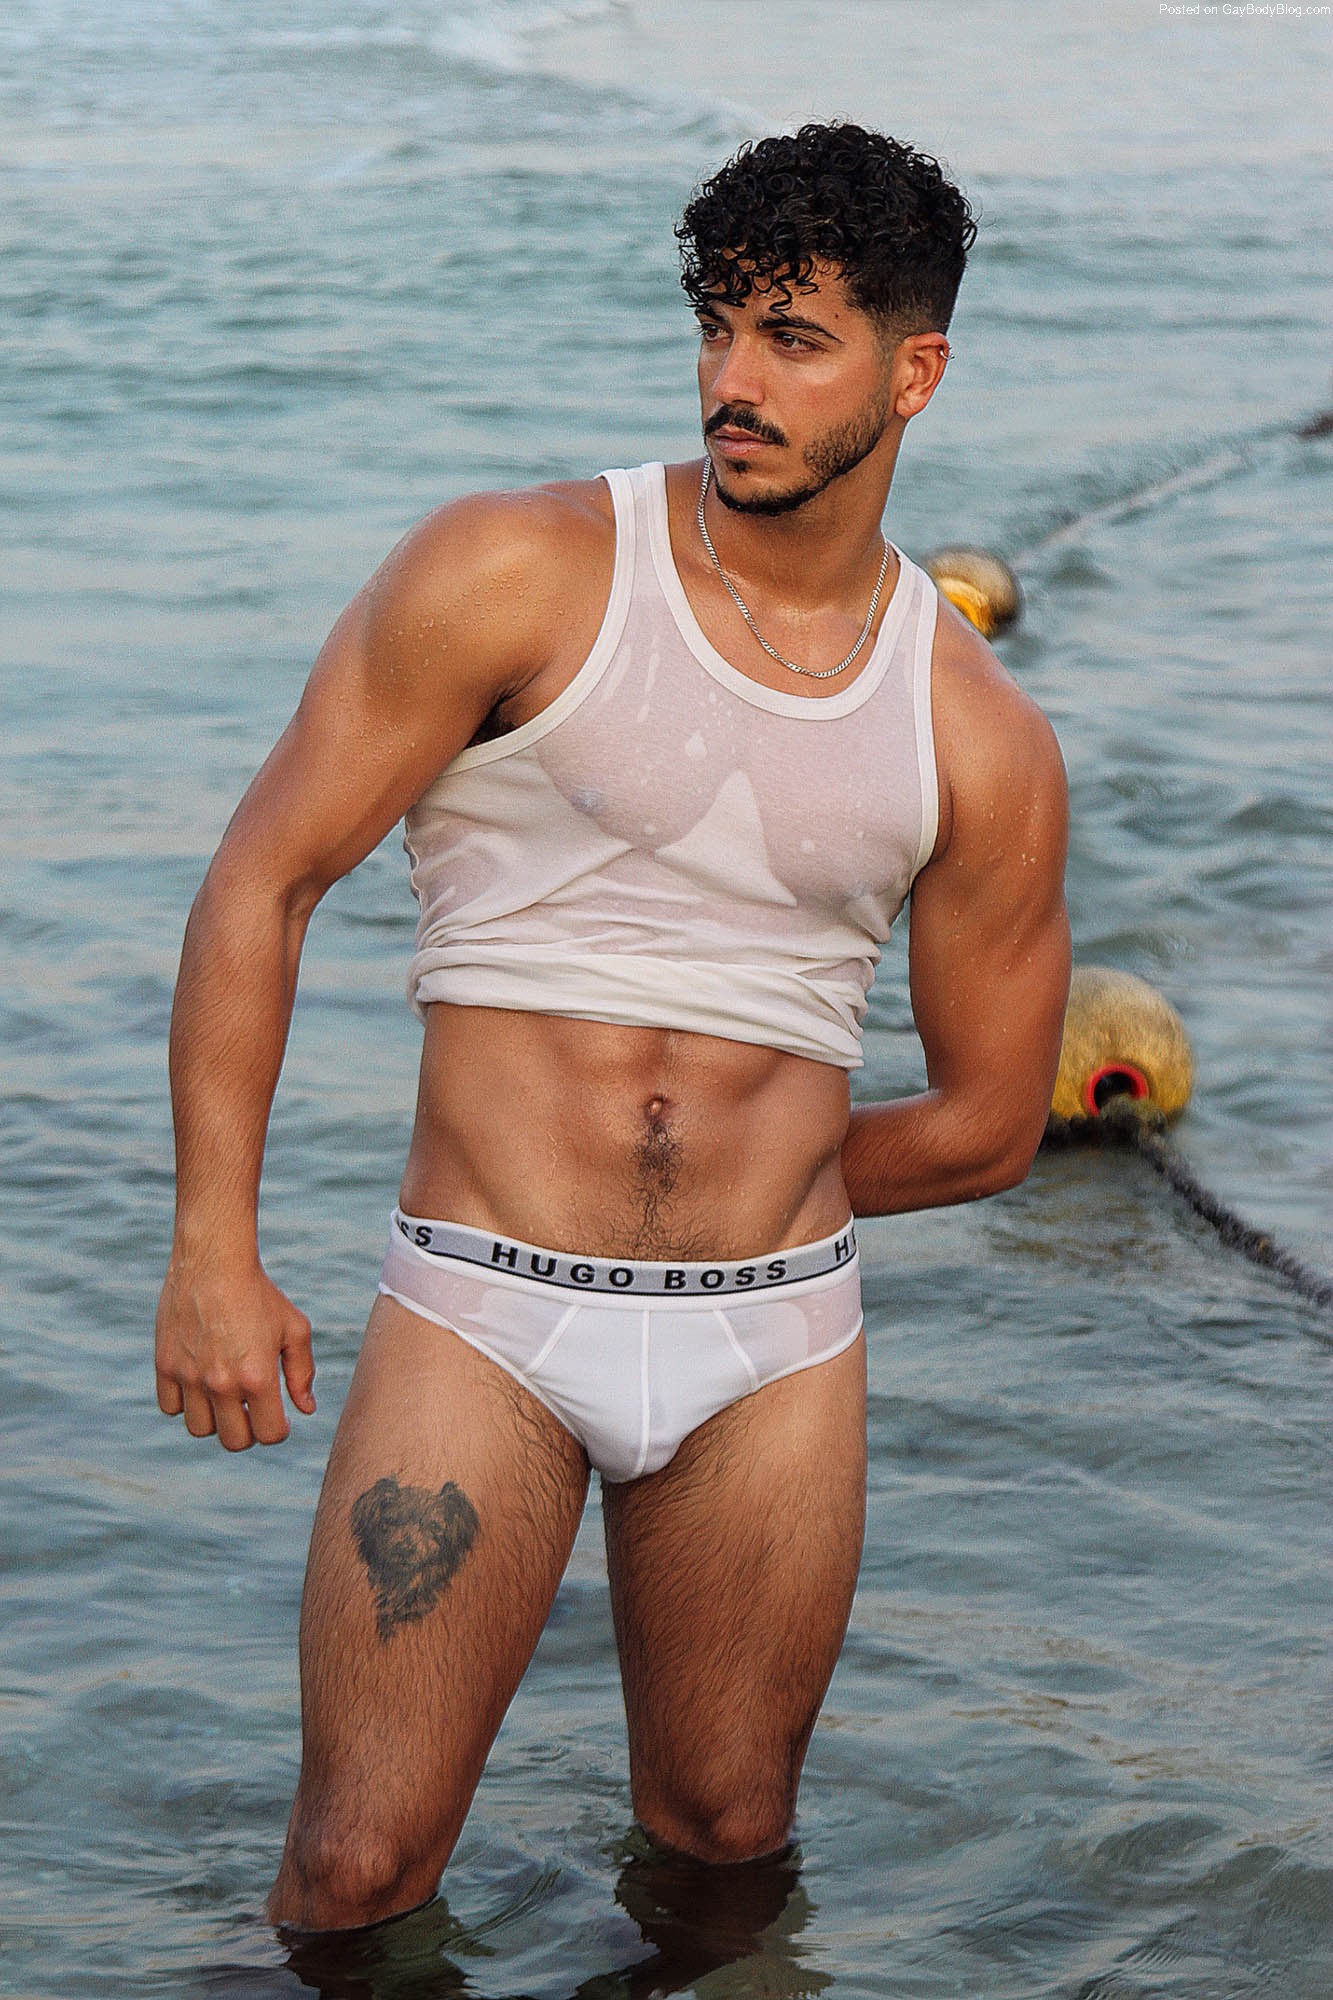 Ayal Mazaki Looks Good In His Underwear! | Daily Dudes @ Dude Dump